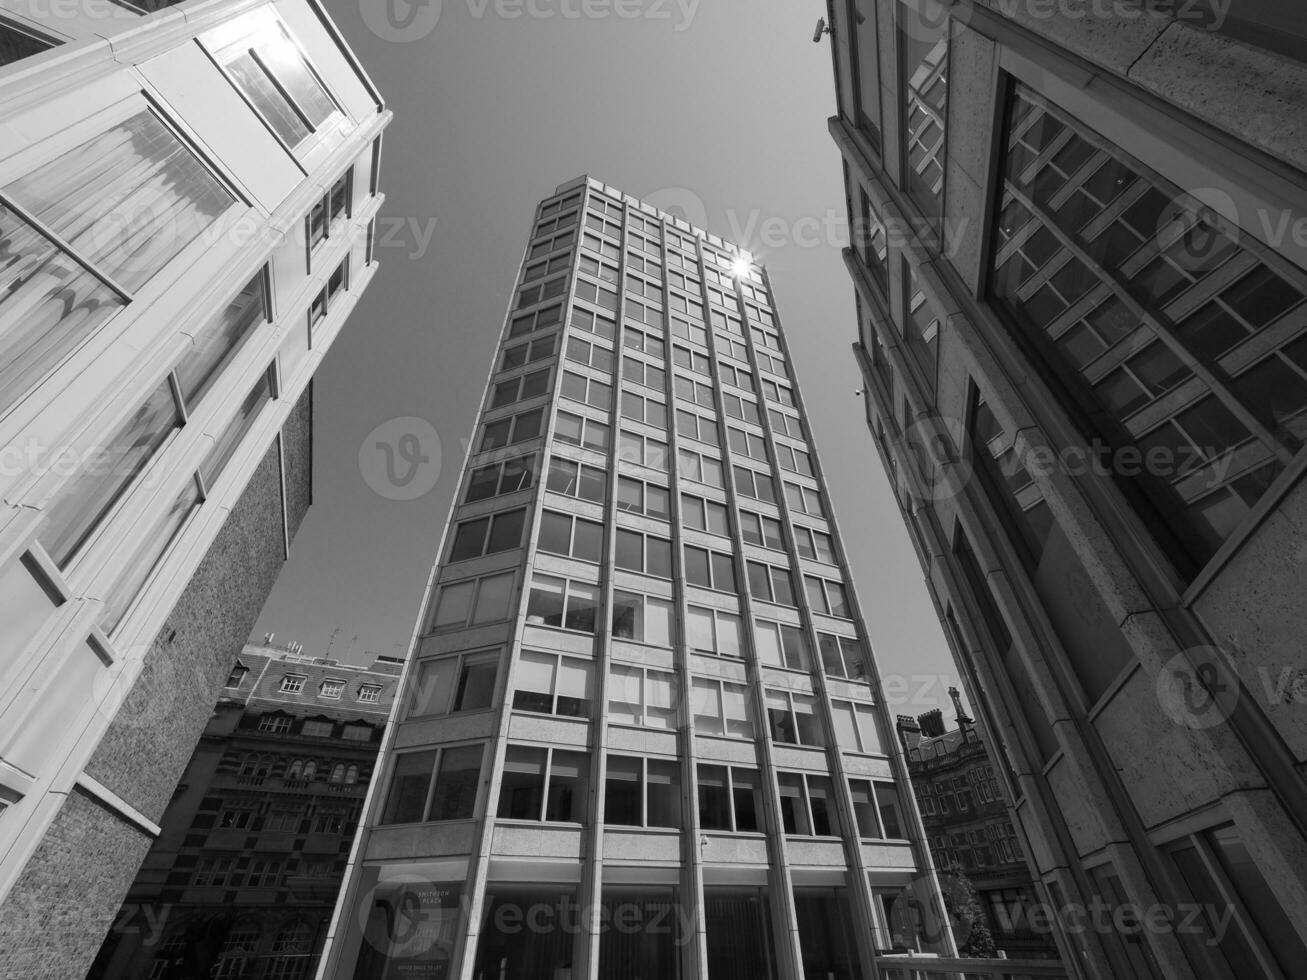 Economist Building in bw in London photo